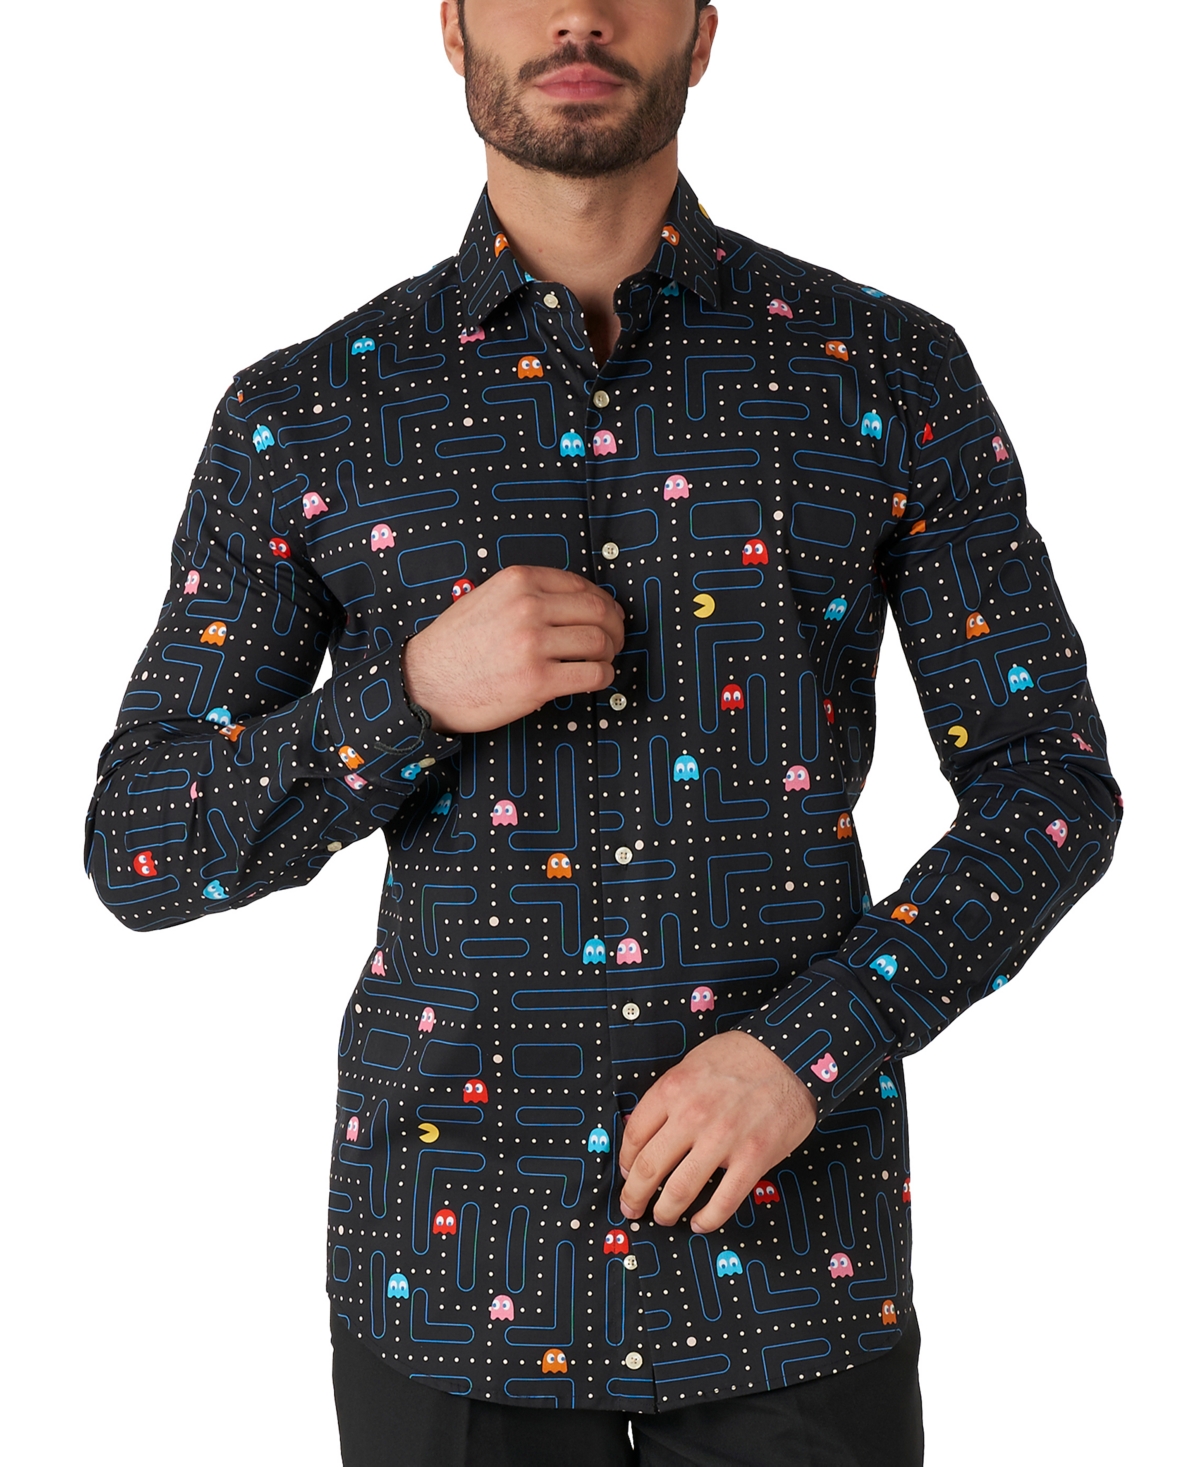 Men's Long-Sleeve Pac-Man Graphic Shirt - Black